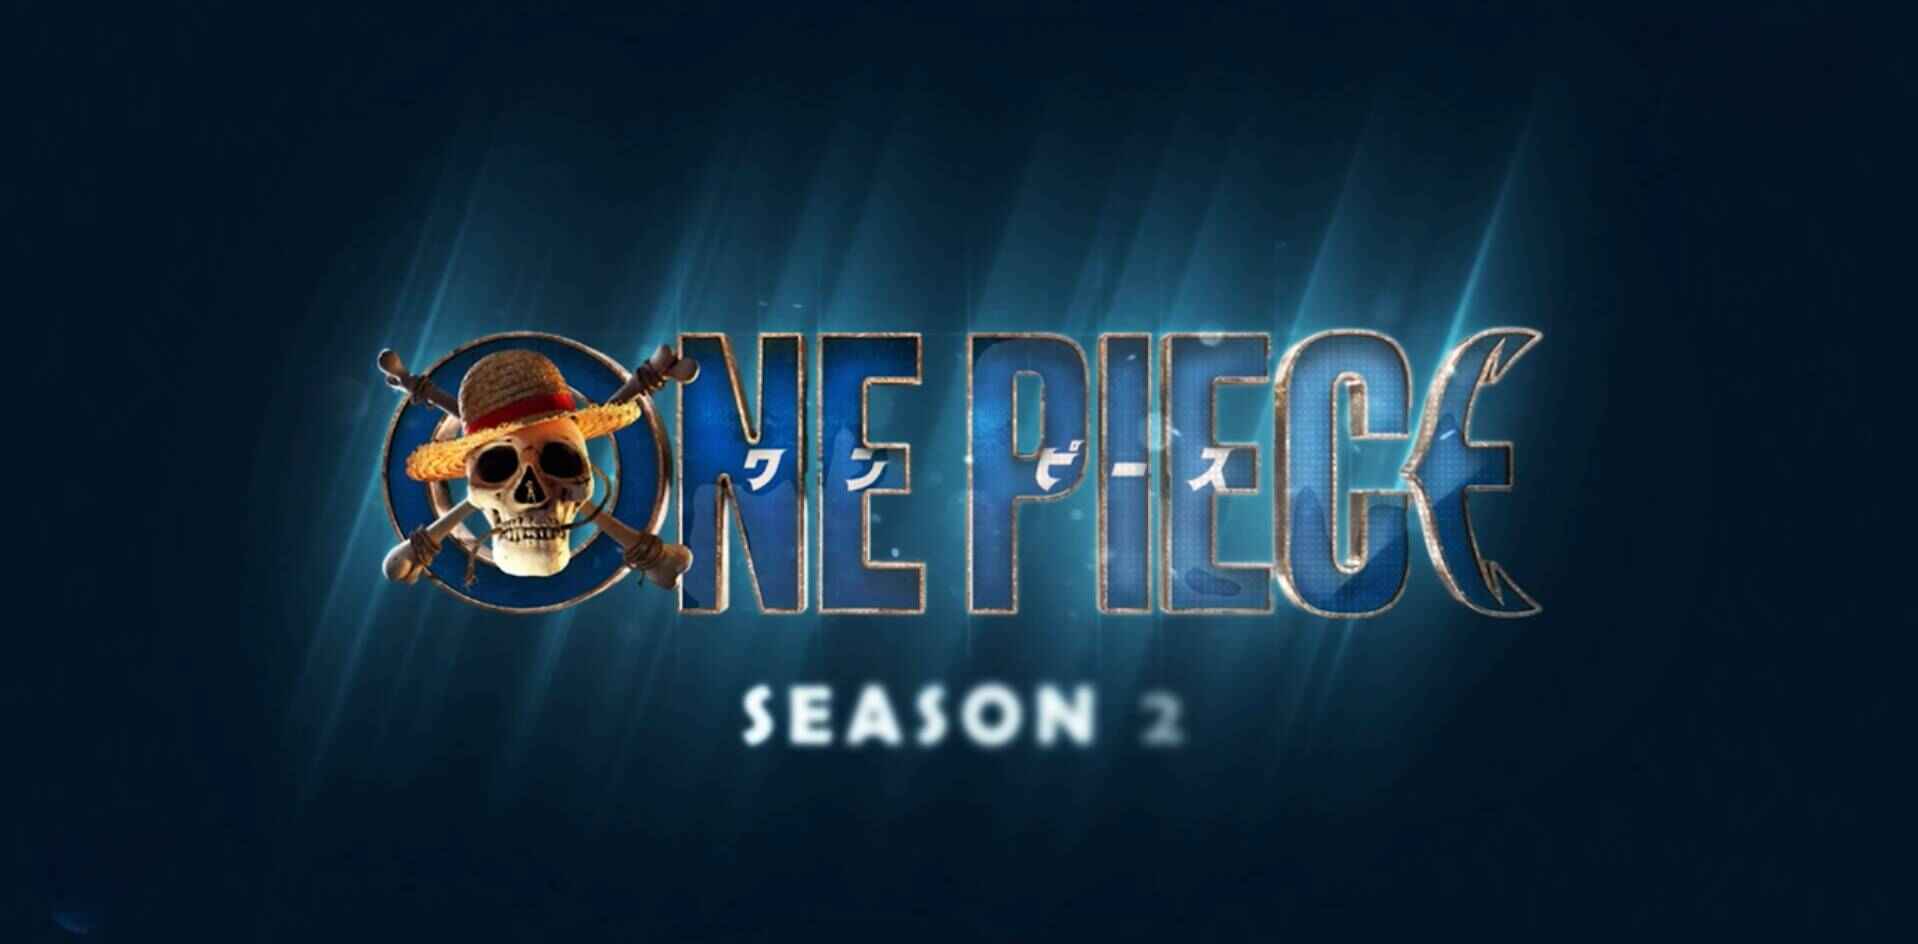 One Piece season 2